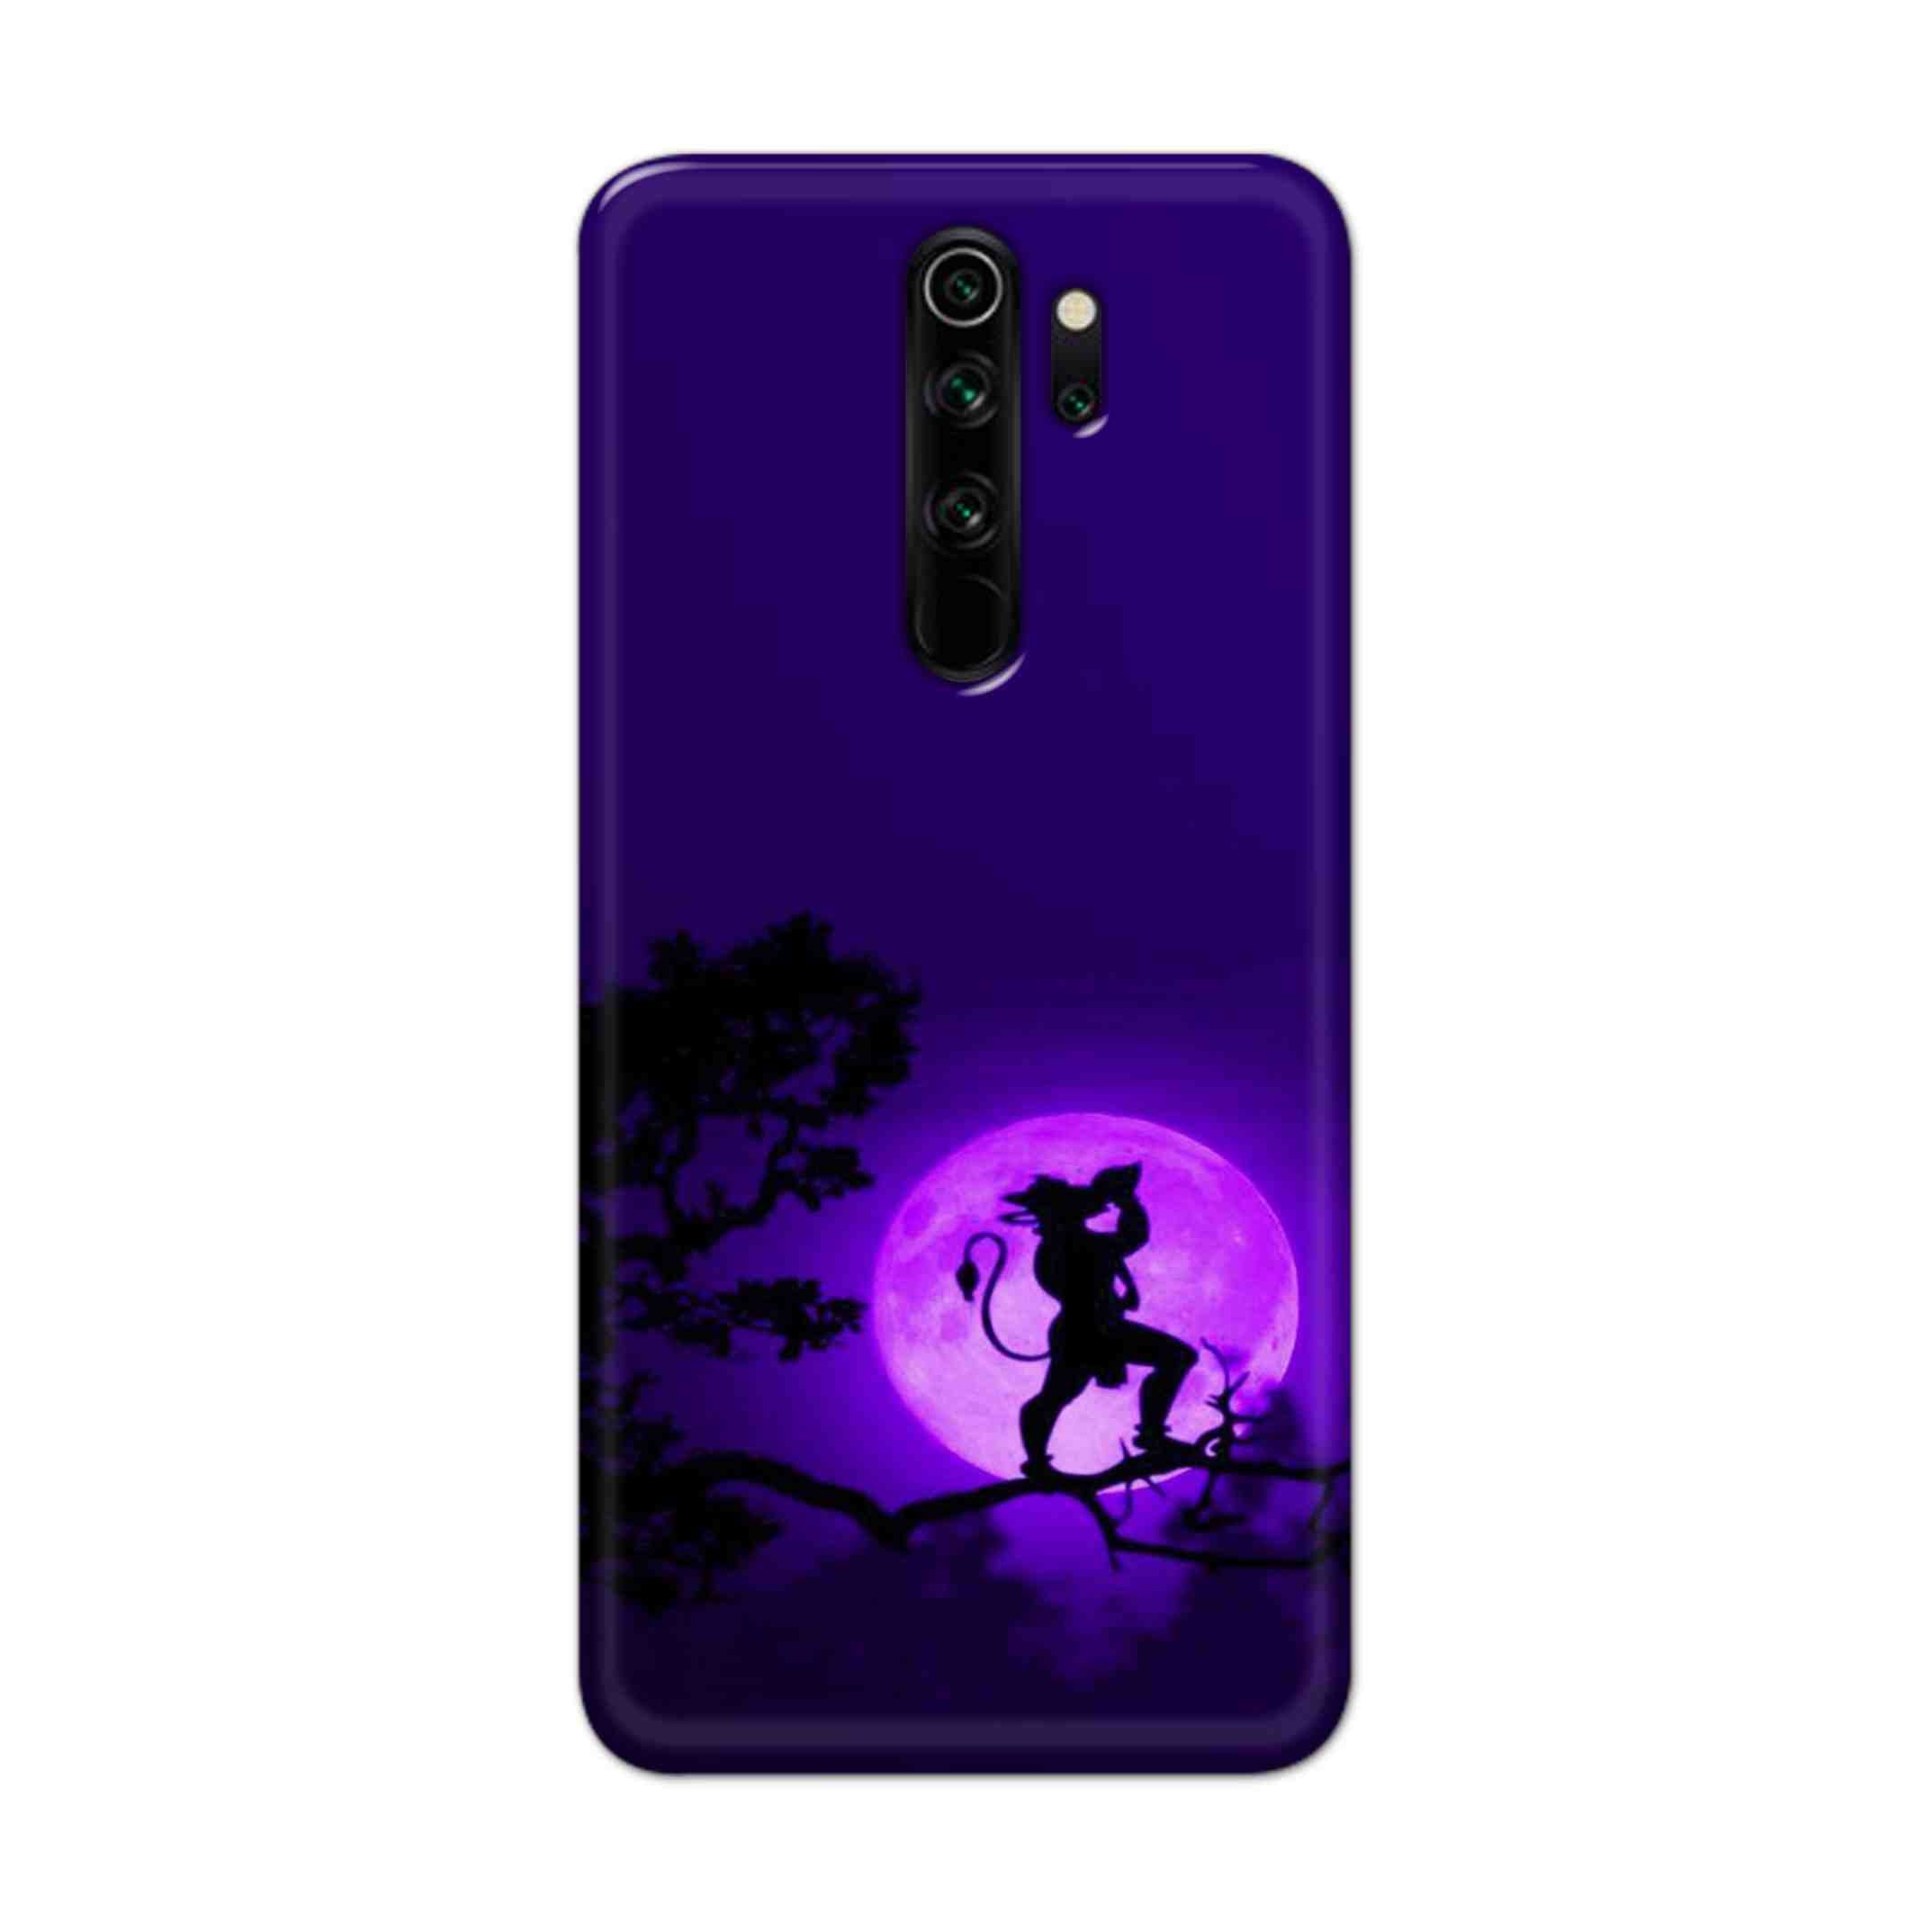 Buy Hanuman Hard Back Mobile Phone Case Cover For Xiaomi Redmi Note 8 Pro Online